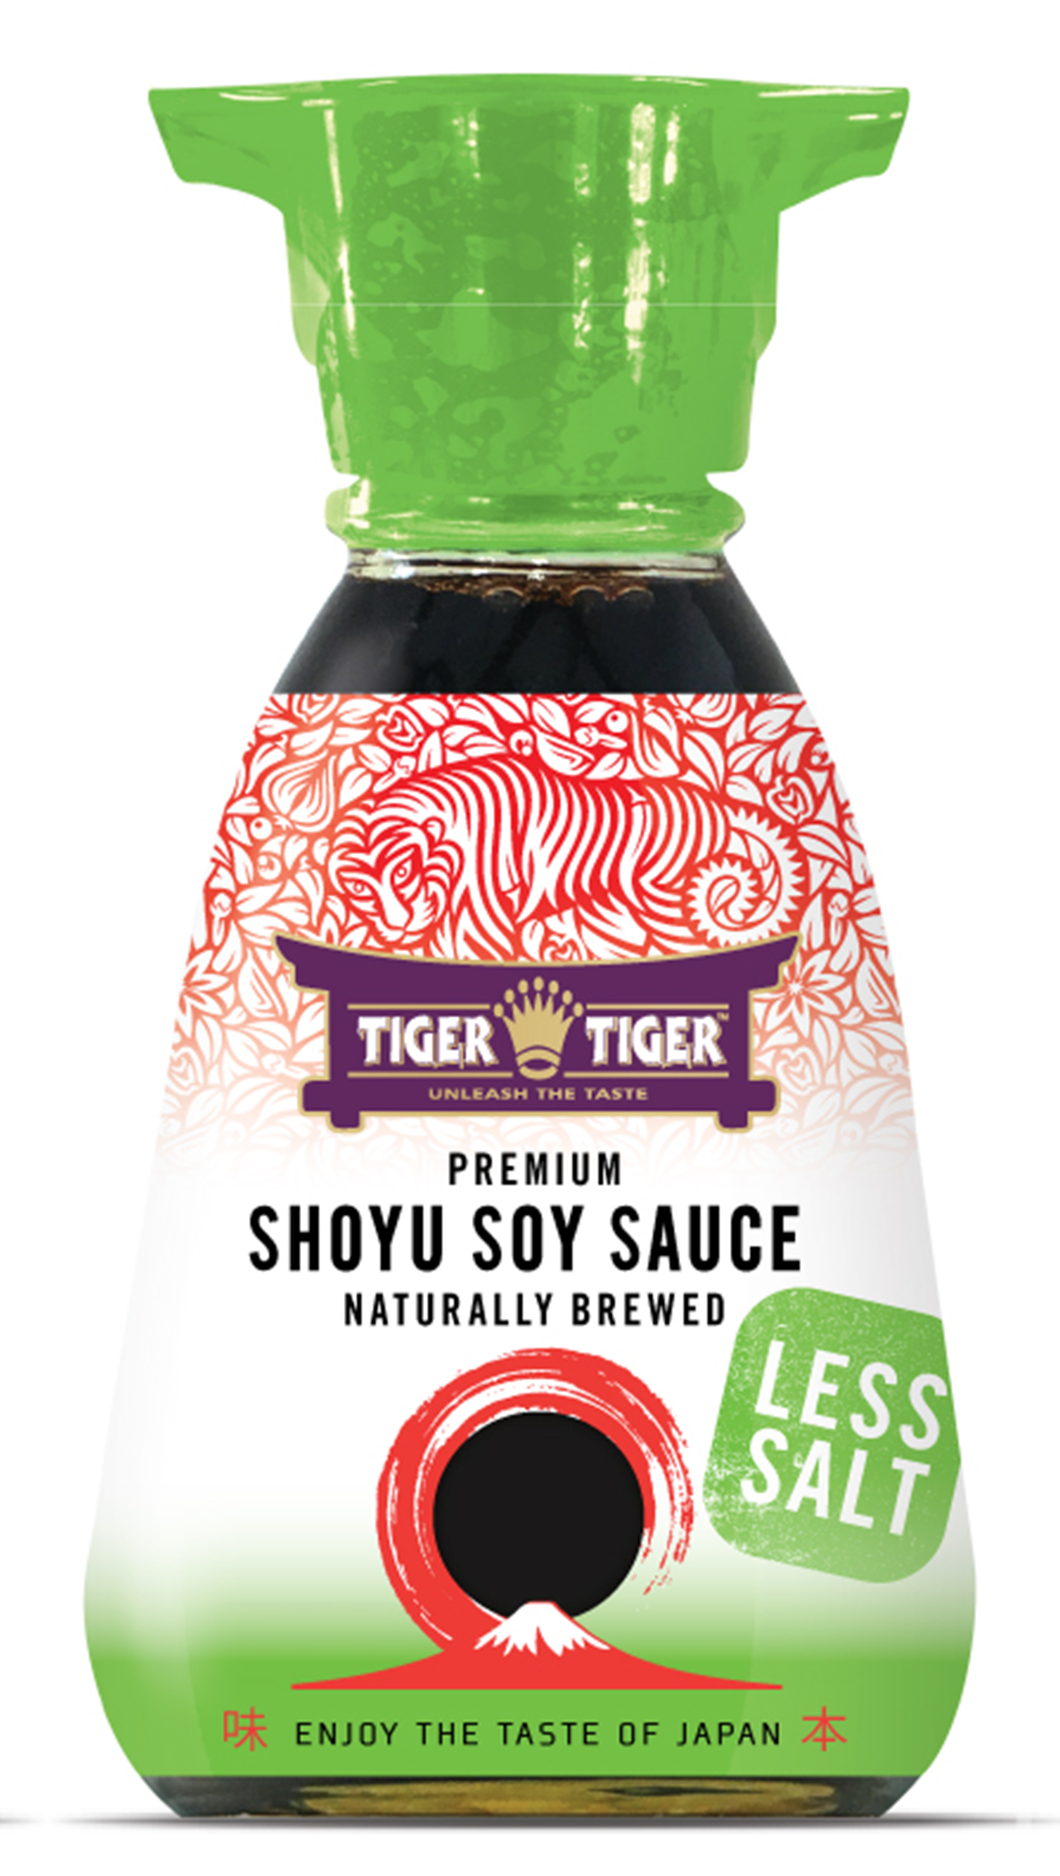 Less Salt Shoyu Soy Sauce